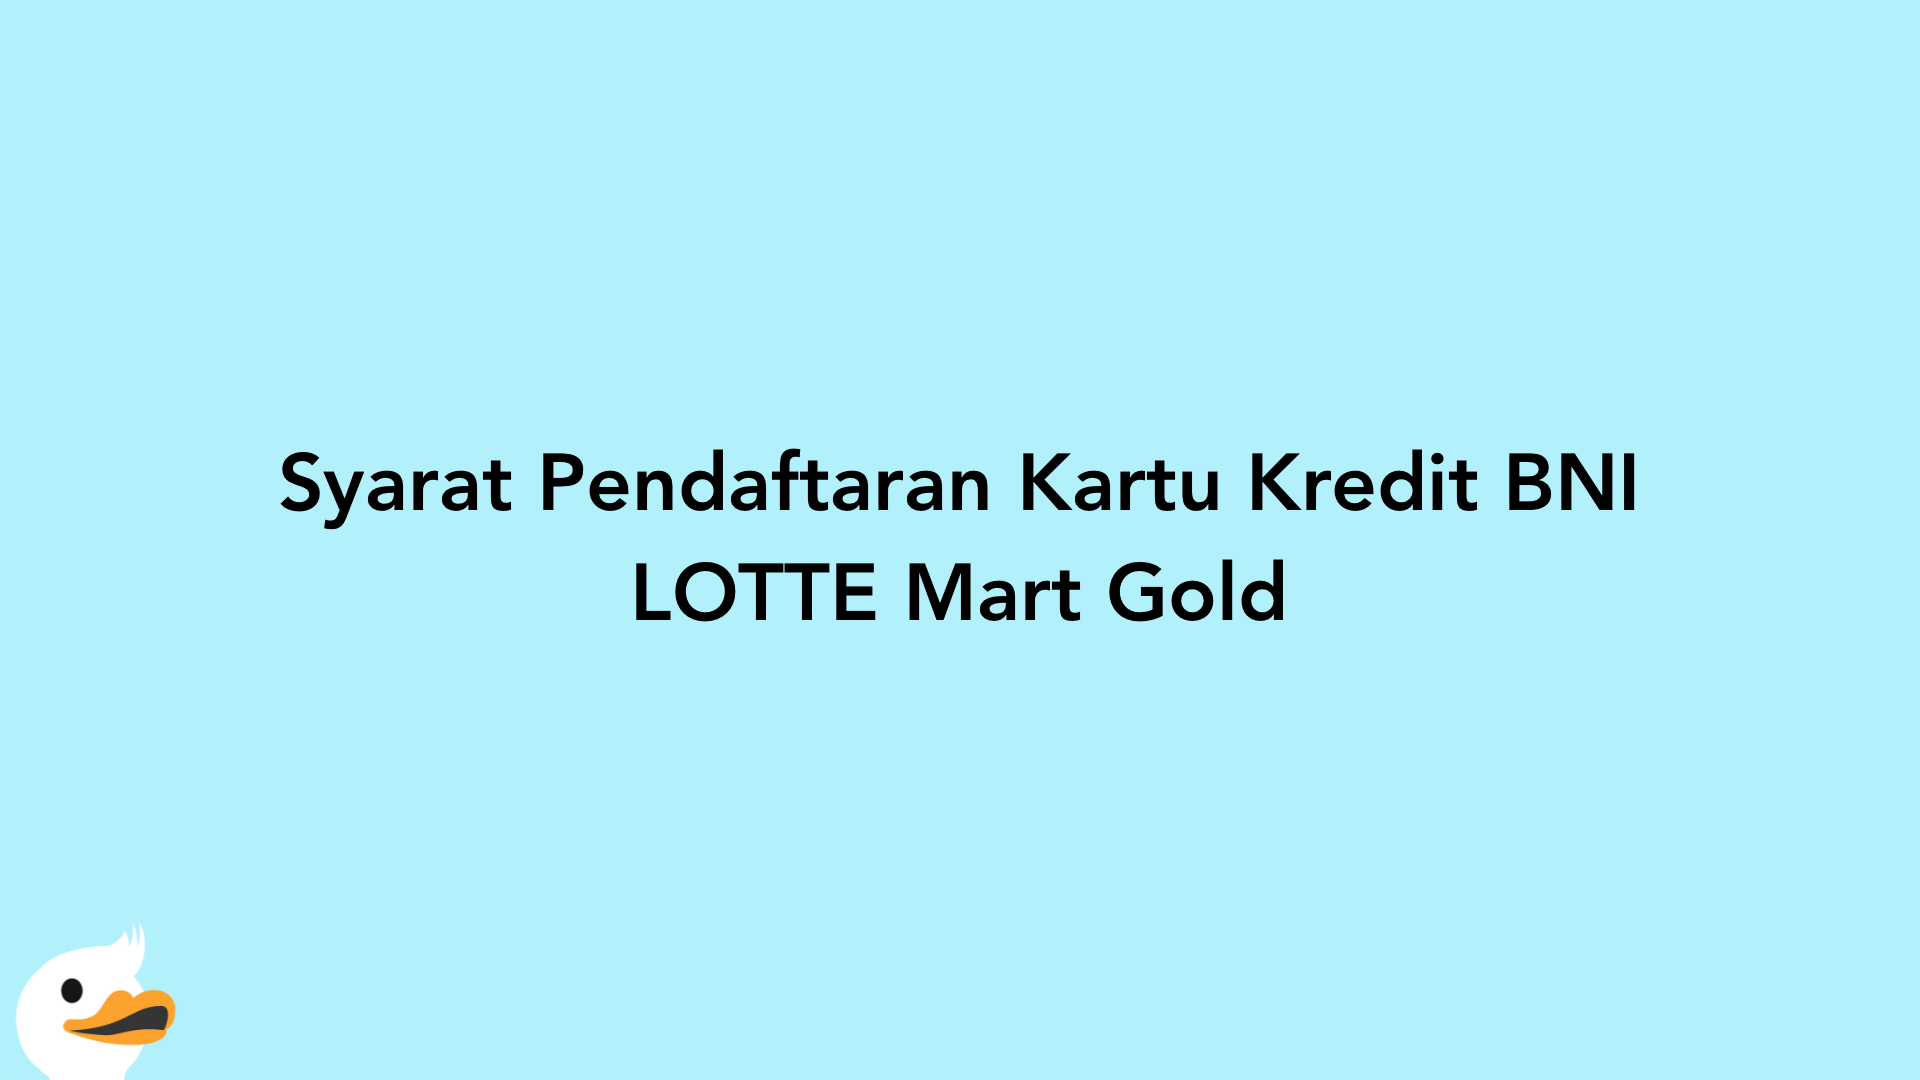 Syarat Pendaftaran Kartu Kredit BNI LOTTE Mart Gold